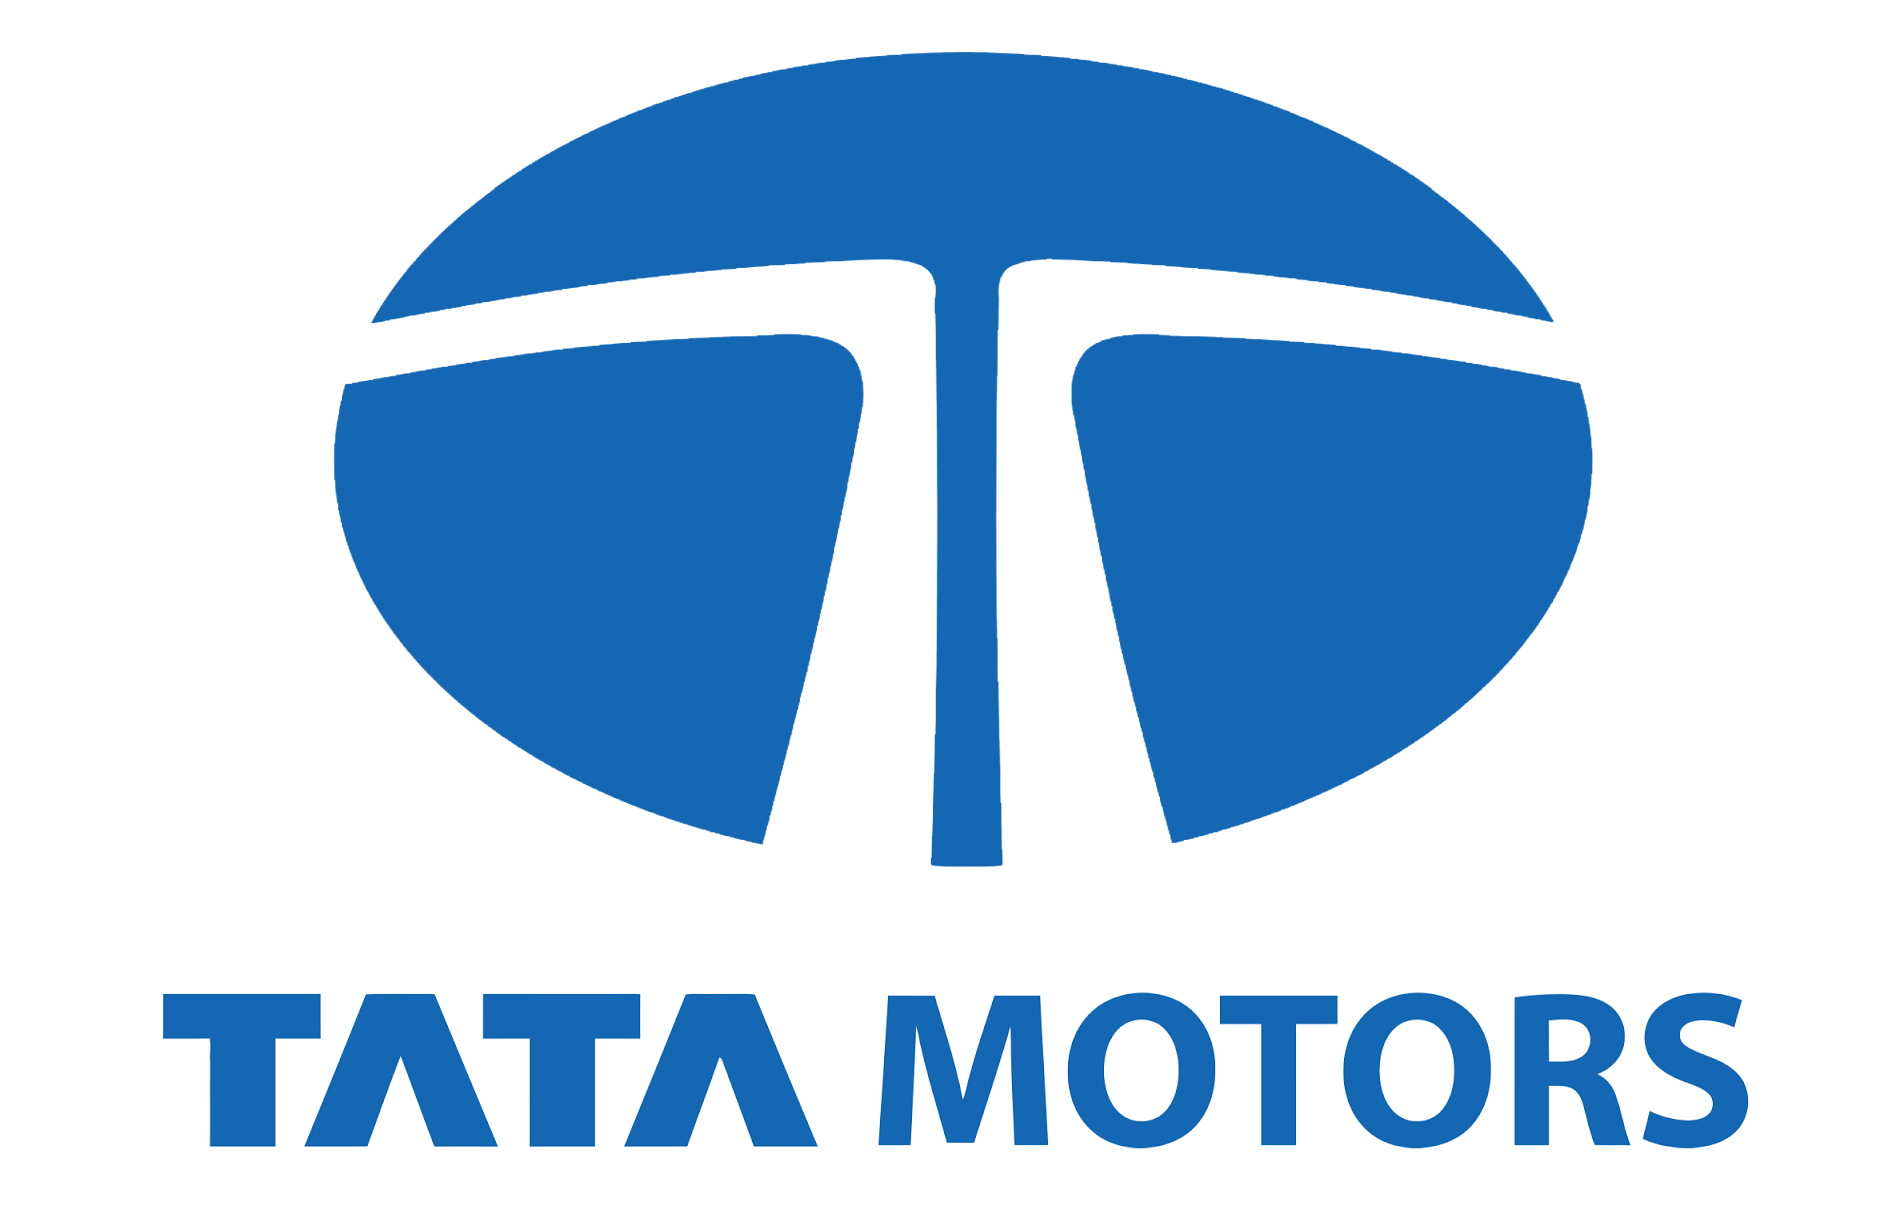 Tata Motors Cars Showroom - Brijlax Motors|Show Room|Automotive